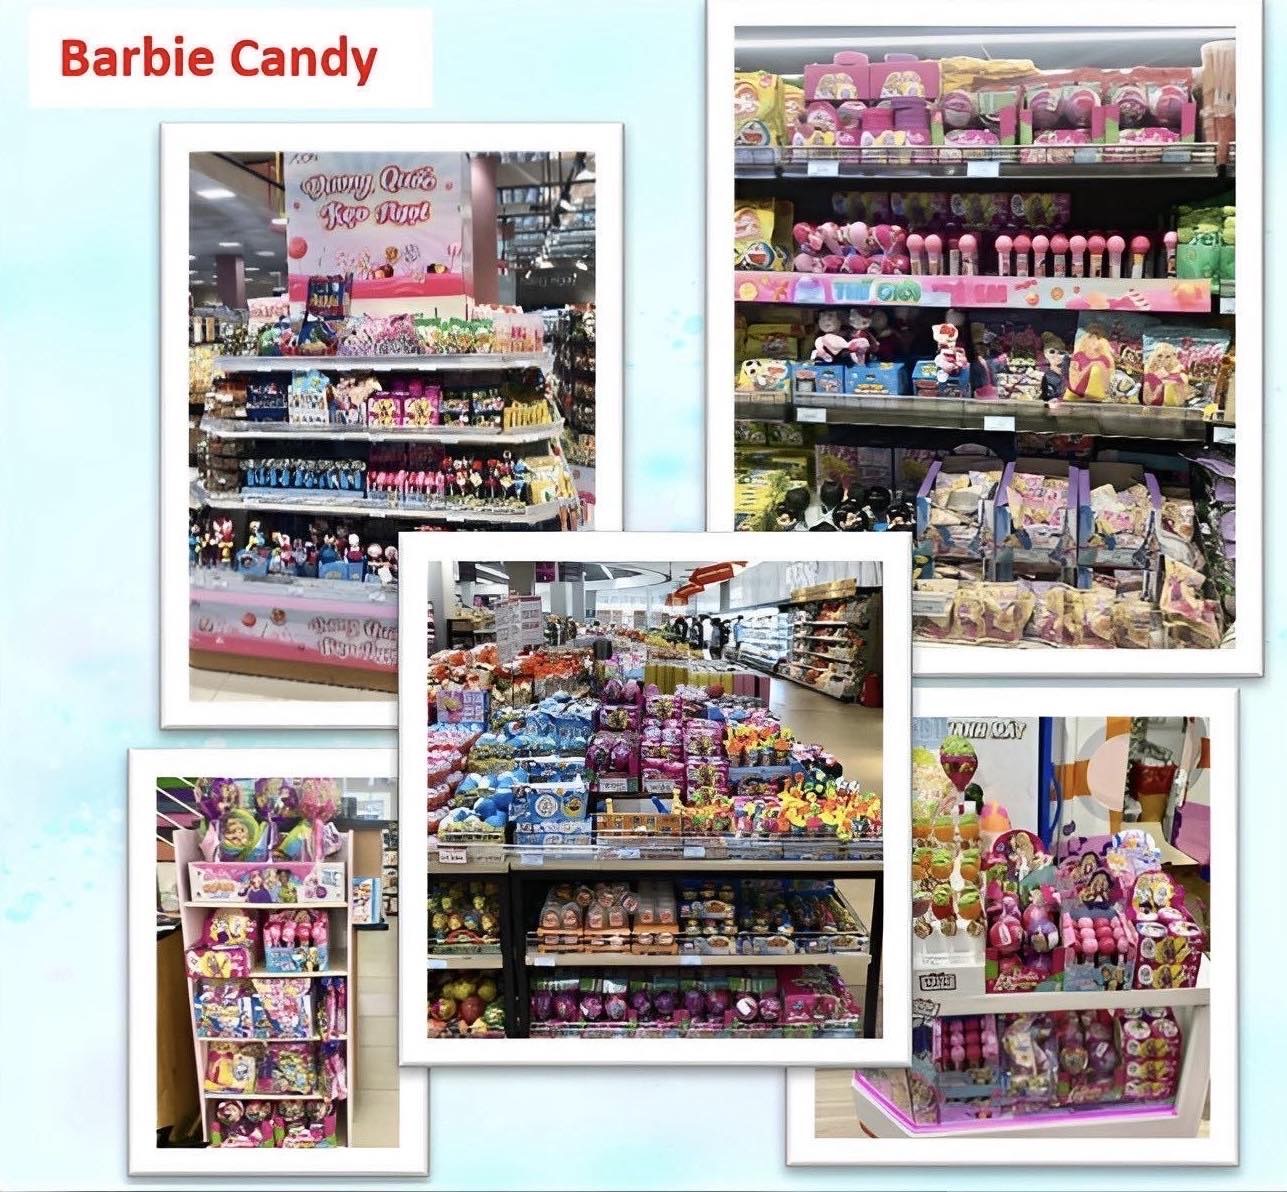 Barbie Candy